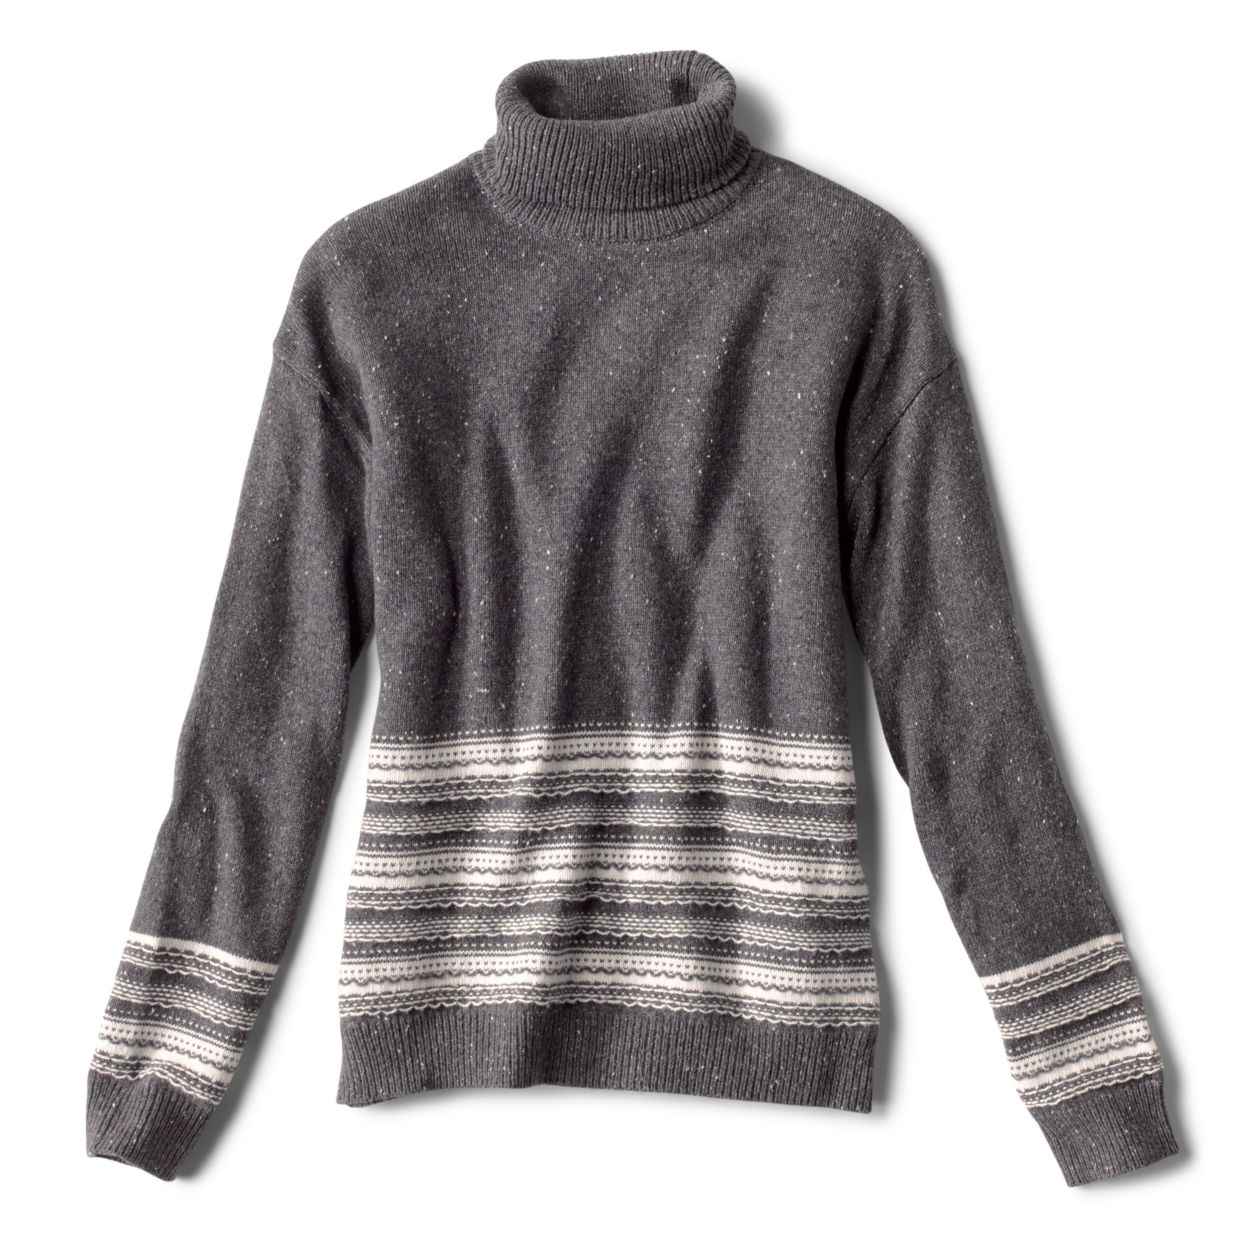 Border-Stitch Detail Sweater